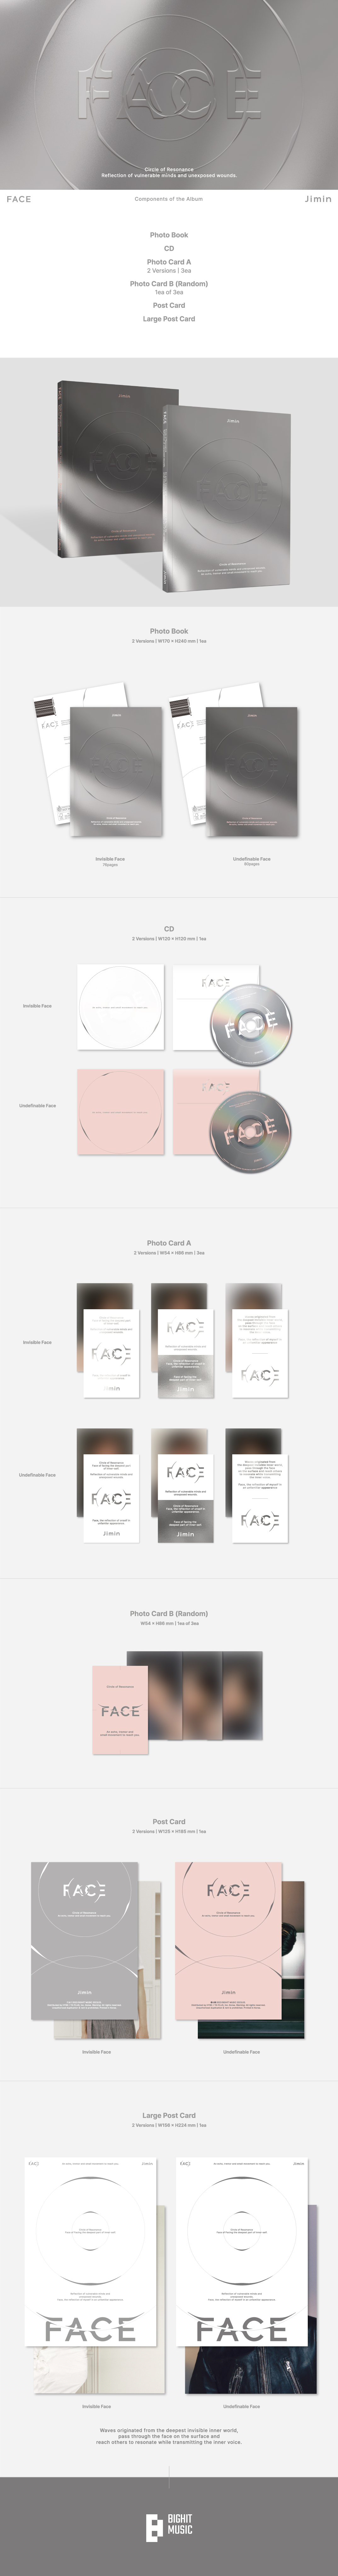 JIMIN Solo Album 'FACE' 発売決定！本日2月22日(水)より予約販売